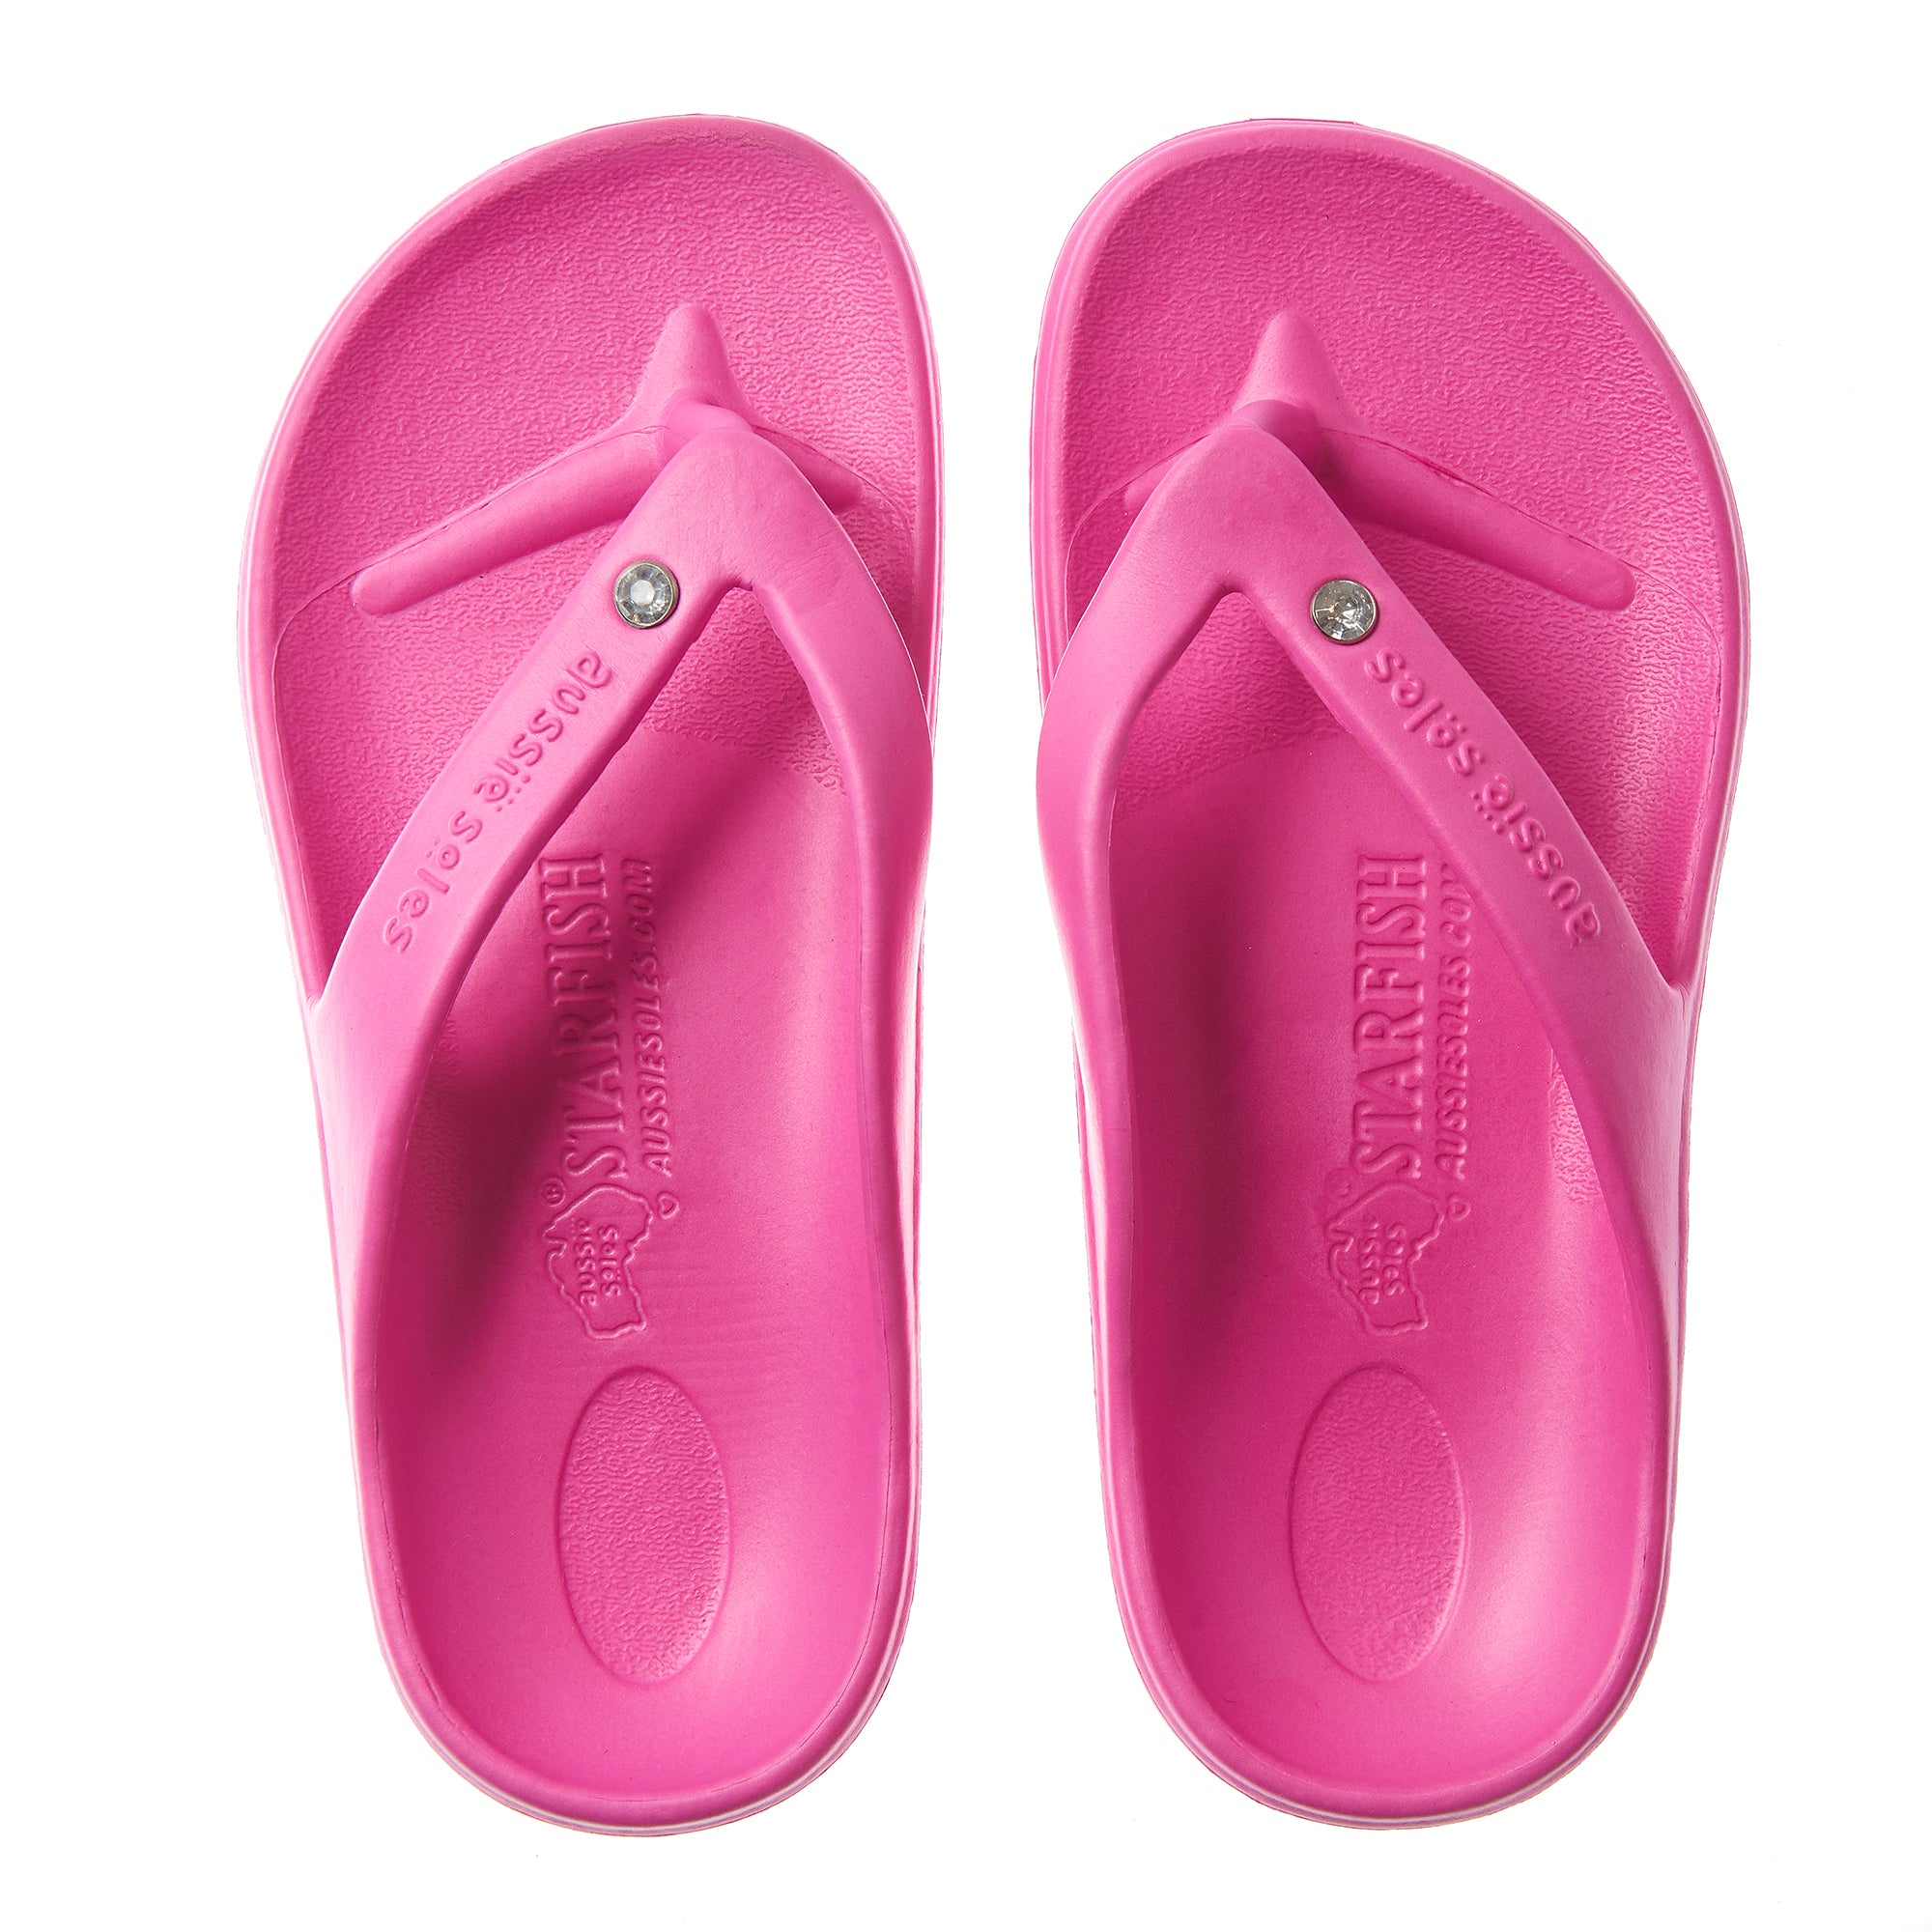 Children's Flip-Flops With Arch Support: Aussie Soles Orthotic Sandals ...